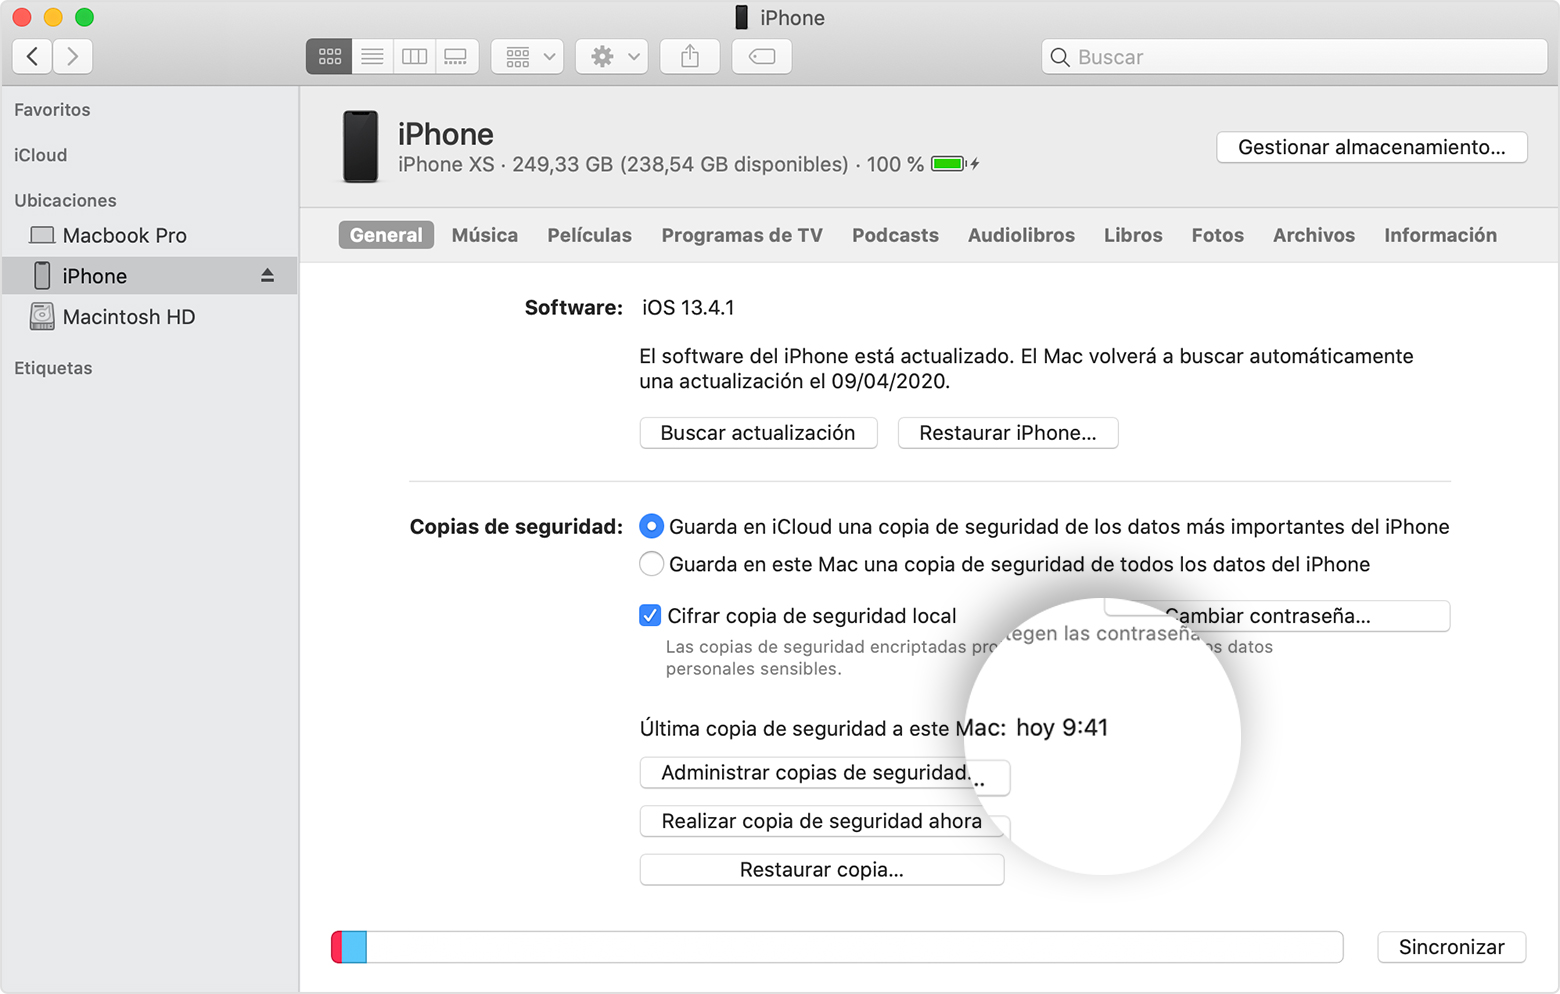 Guardar copia seguridad iPhone iPad RIM mobile